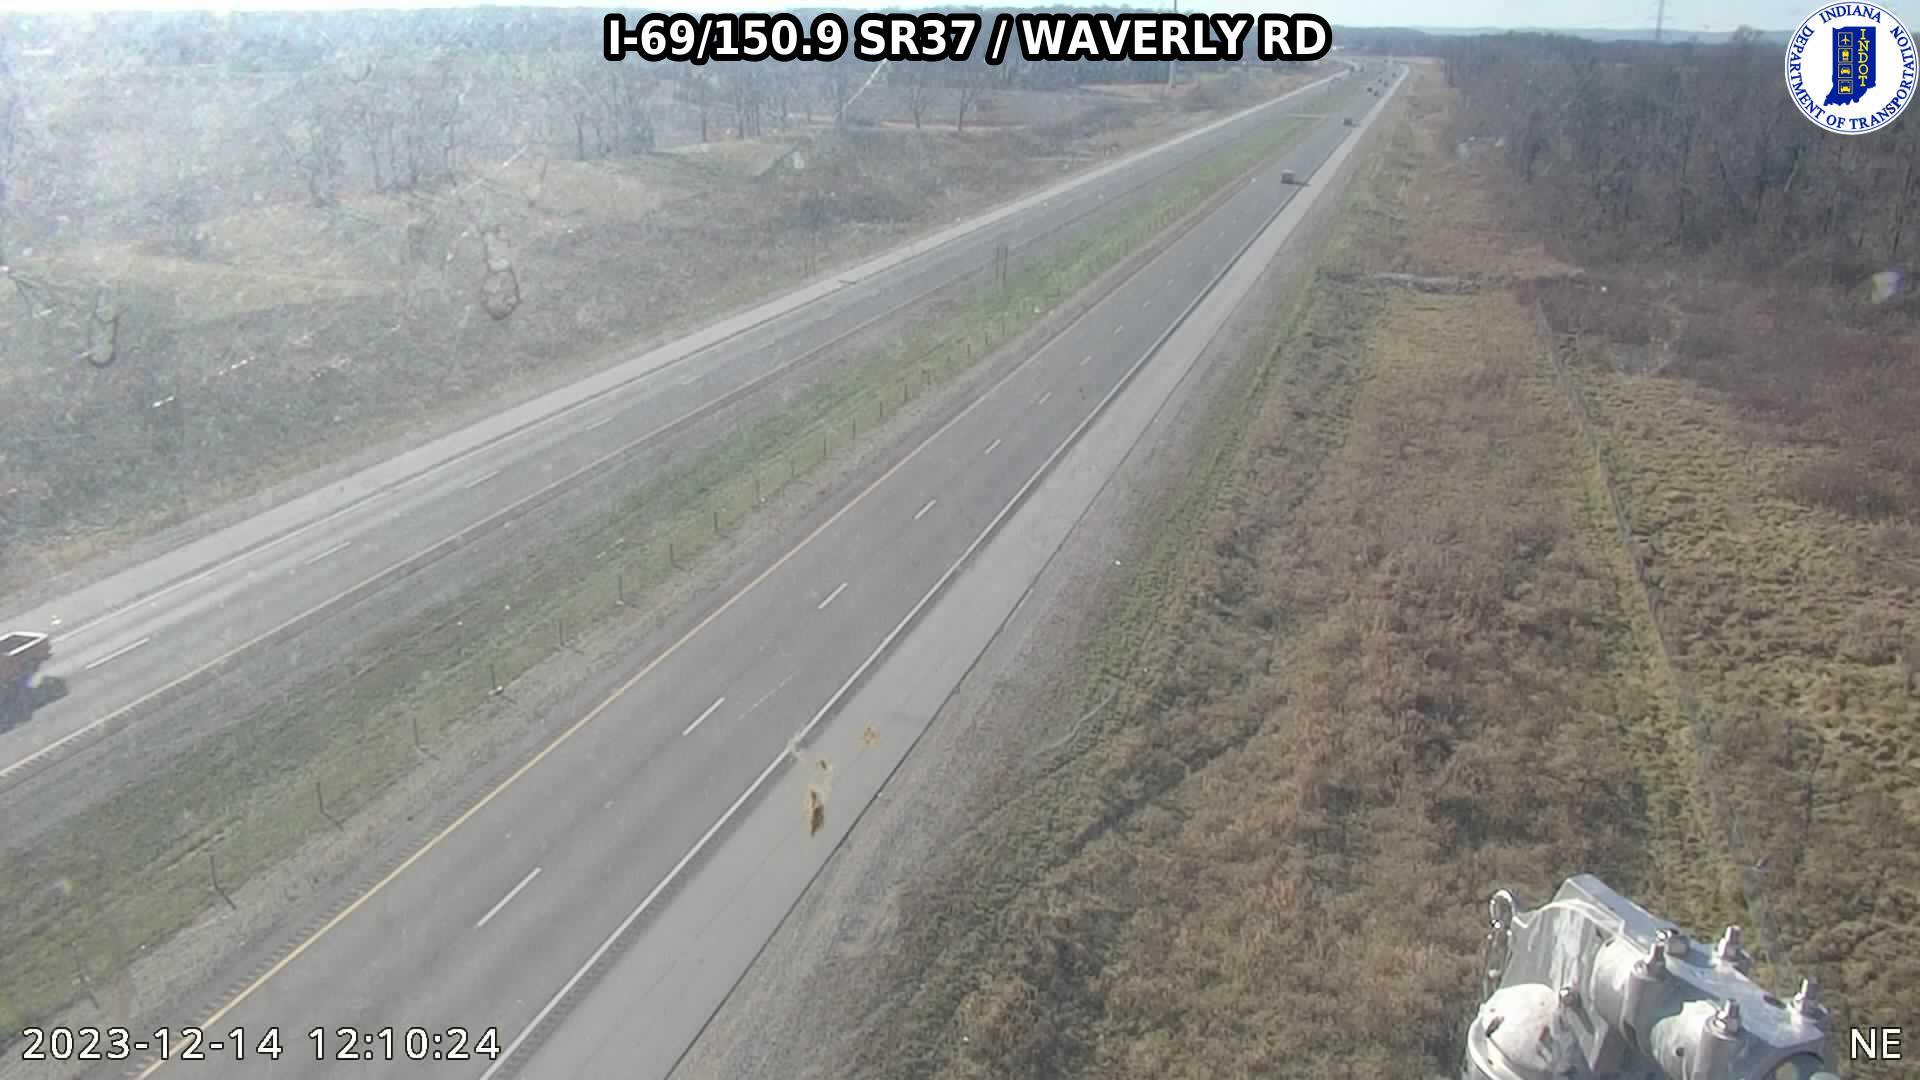 Traffic Cam Waverly Woods: I-69: I-69/150.9 SR37 - WAVERLY RD: I-69/150.9 SR37 - WAVERLY RD Player